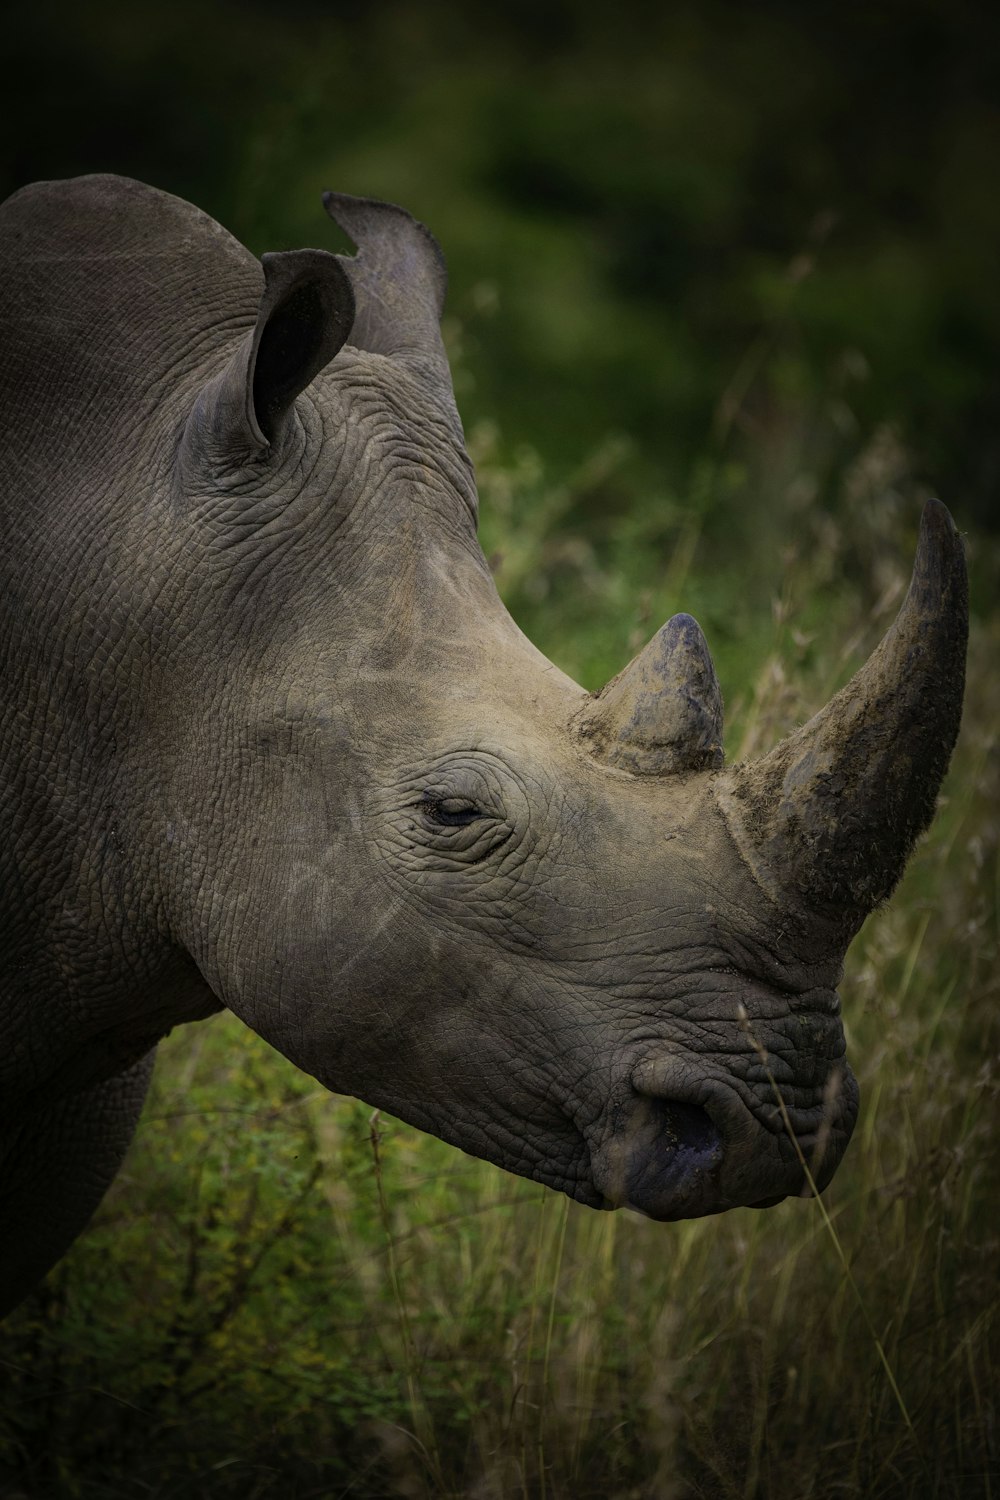 a close up of a rhino in a field of grass